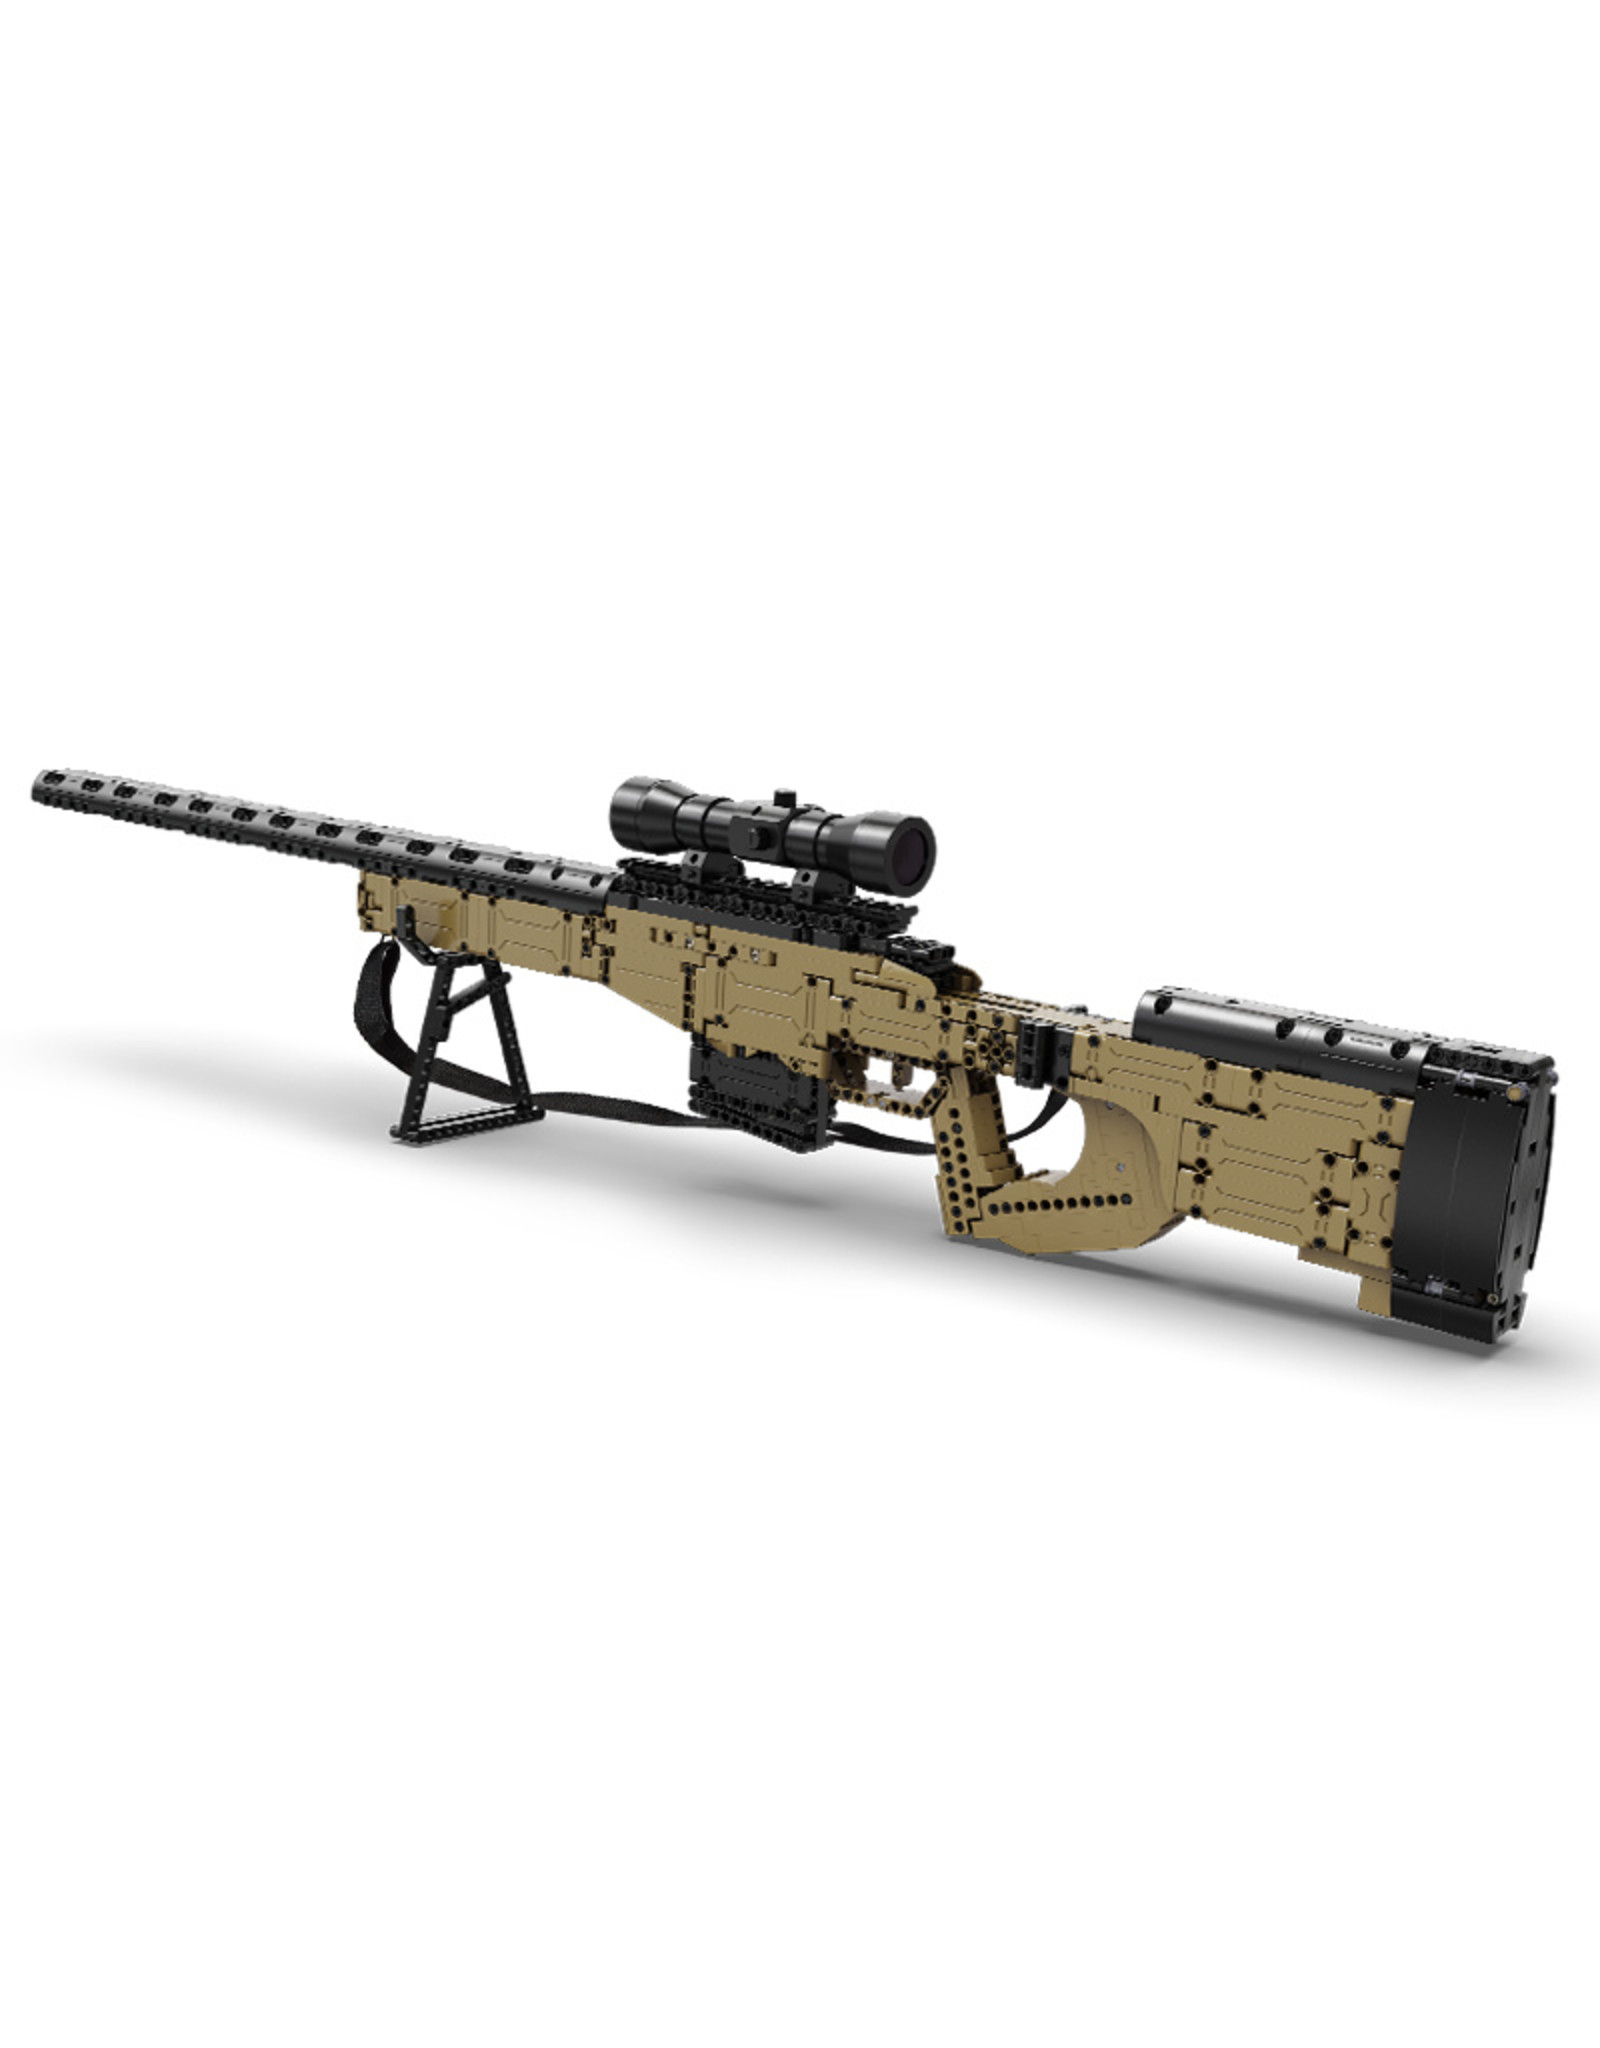 CaDA bricks CaDA Sniper rifle